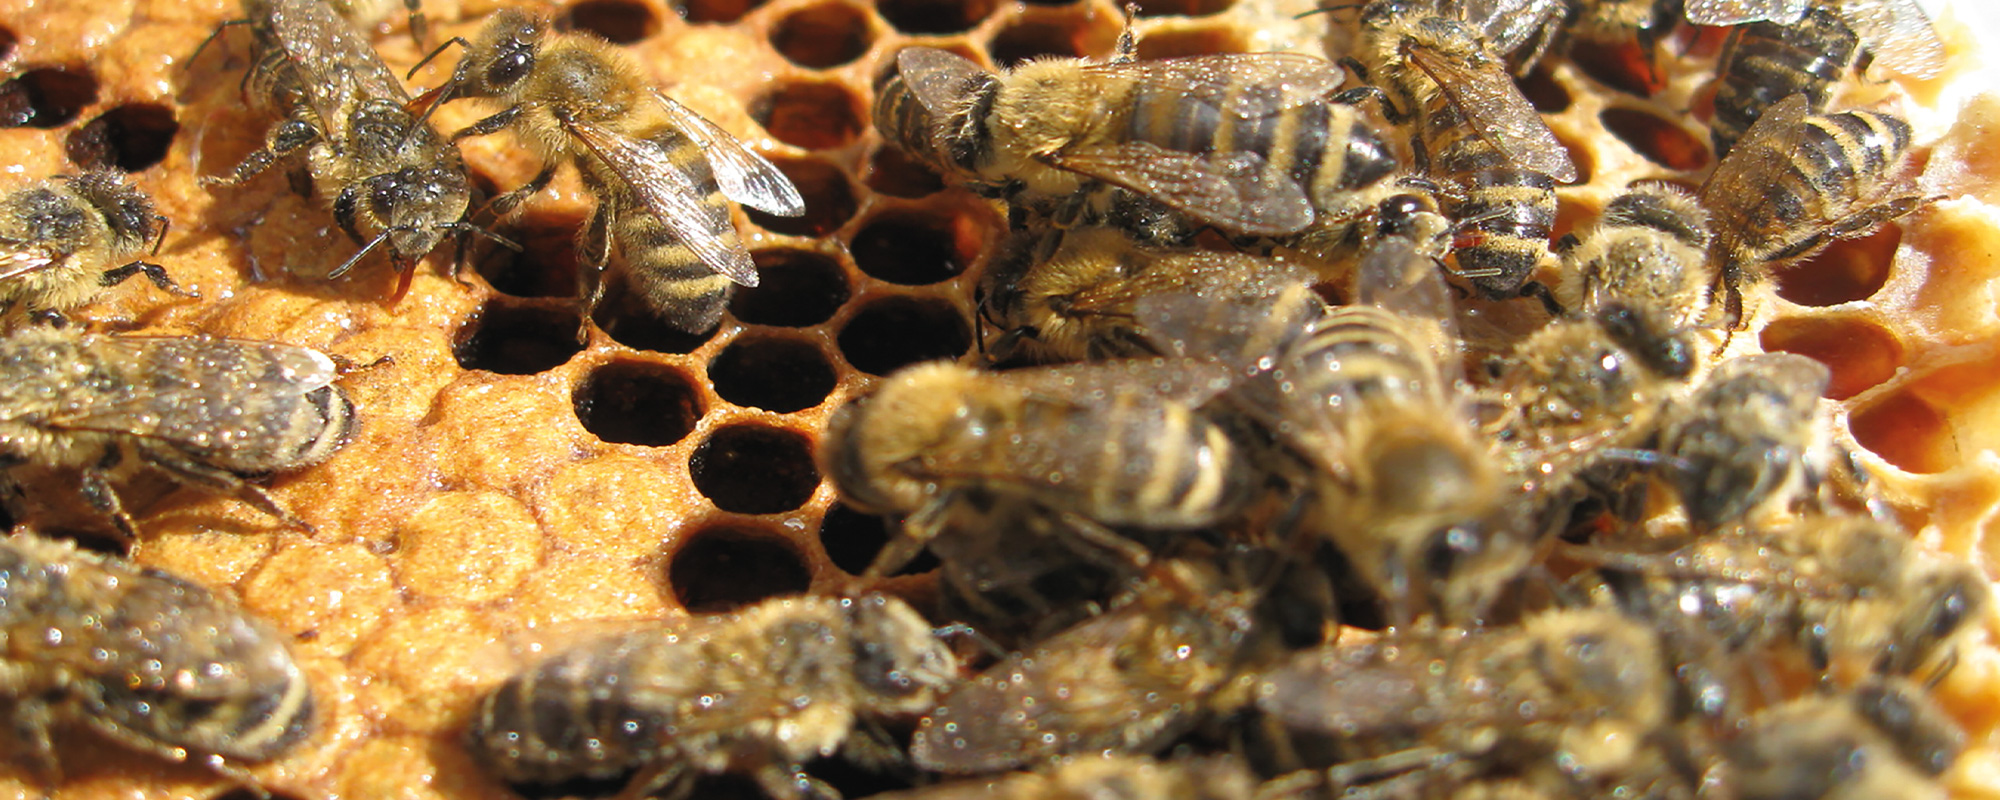 Dr Daniele Alberoni's bees